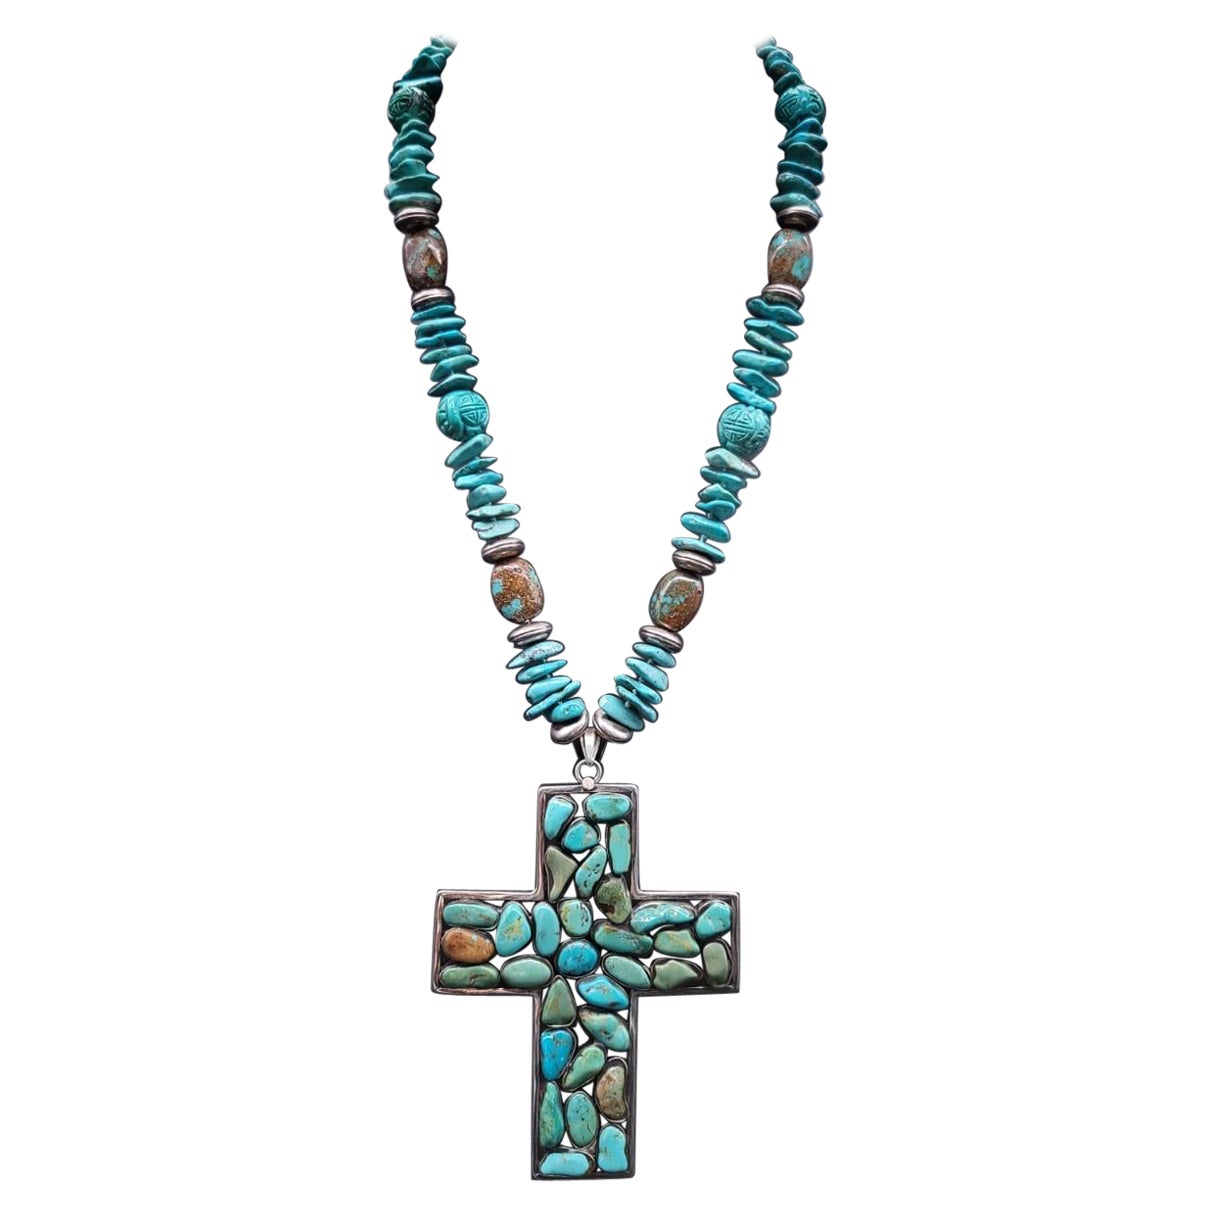 A.Jeschel Exquisite long Turquoise Cross pendant necklace For Sale